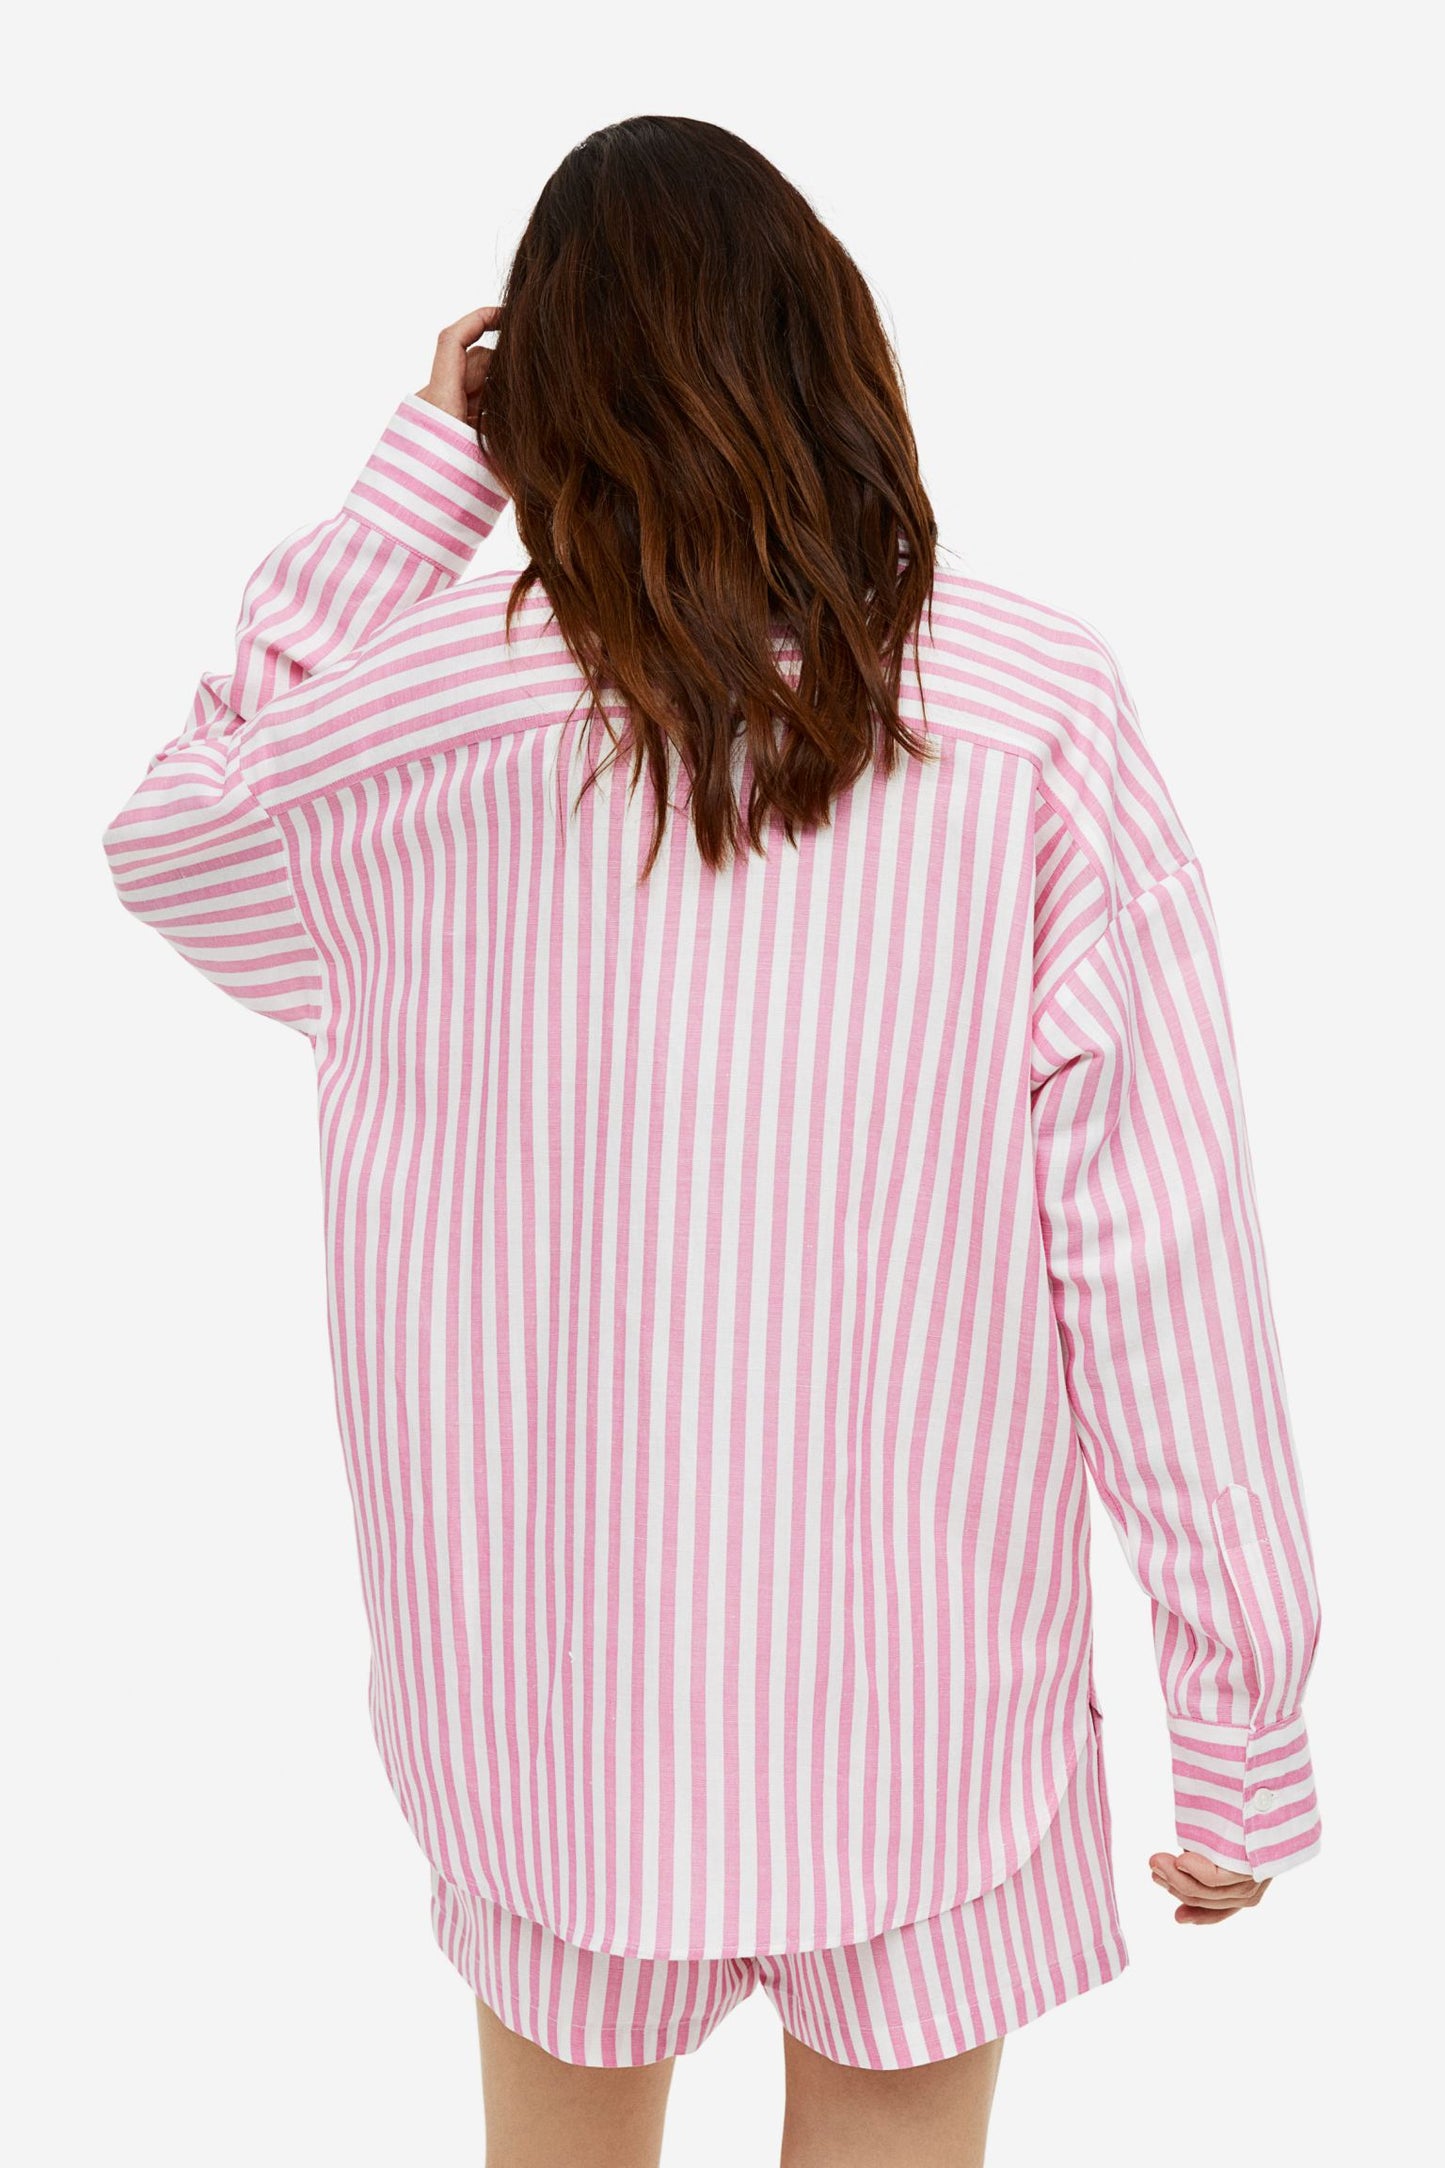 Overszied Stripe Shirt